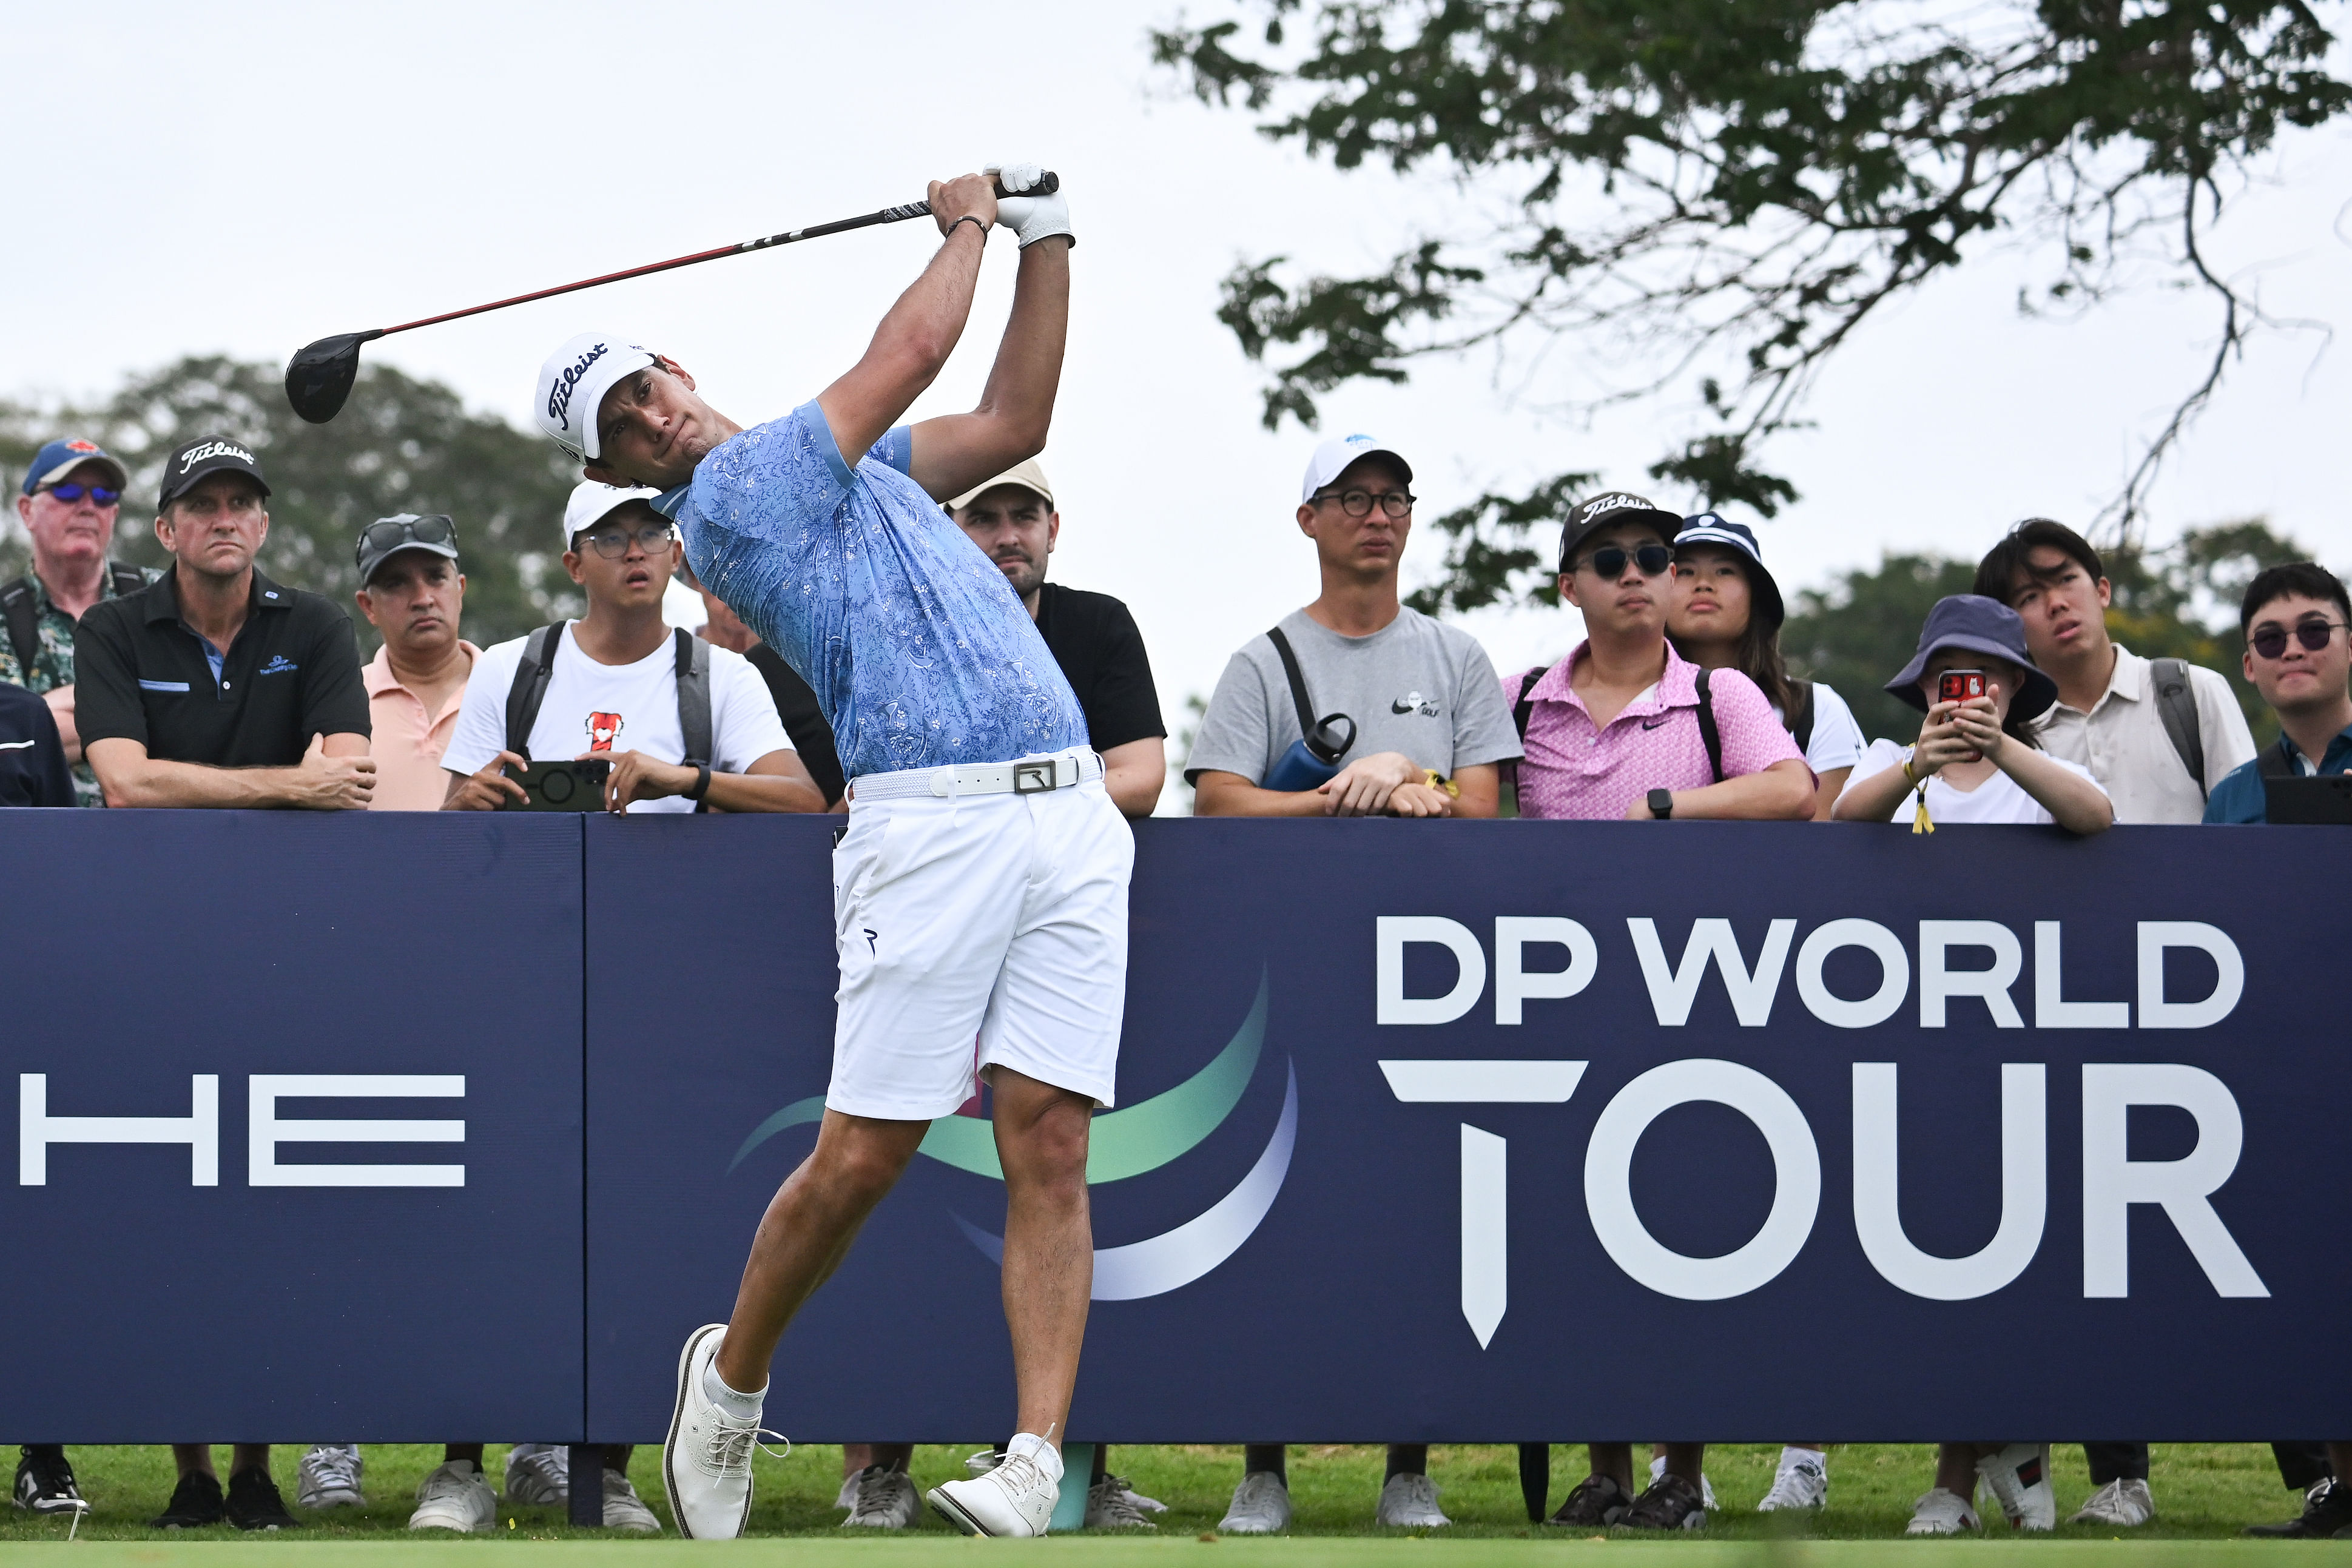 Italian golfer Matteo Manassero waits 11 years for a DP World Tour victory